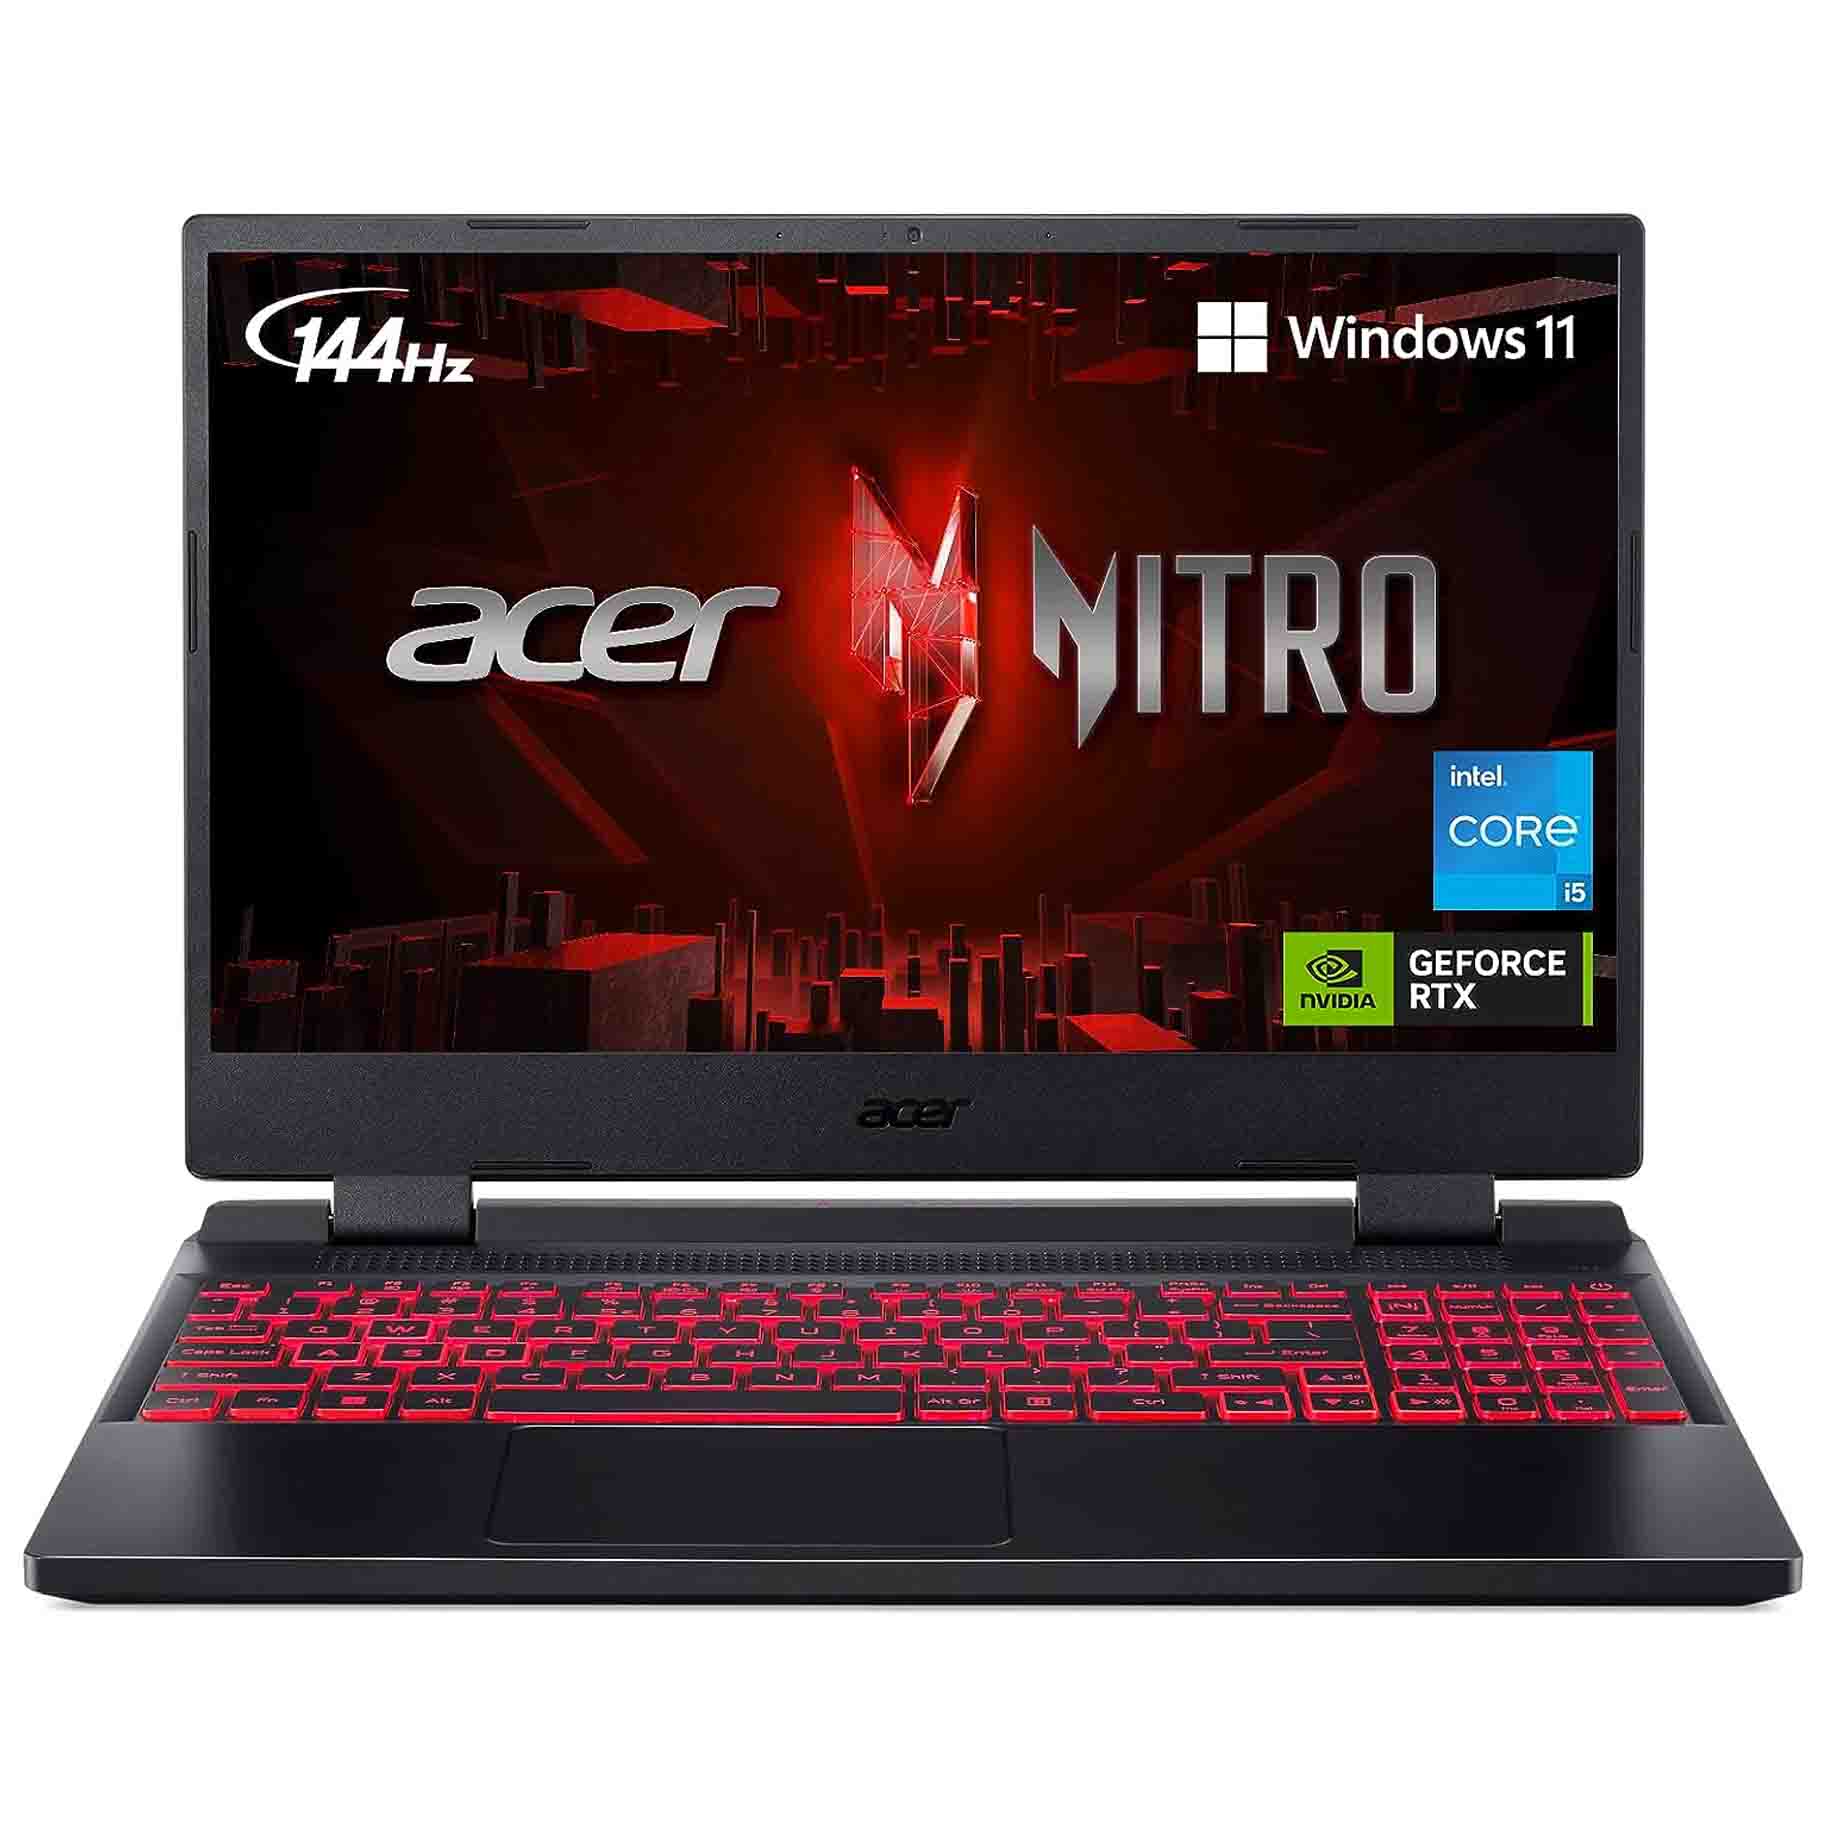 Acer Nitro 5 Gaming Laptop with lit up keyboard